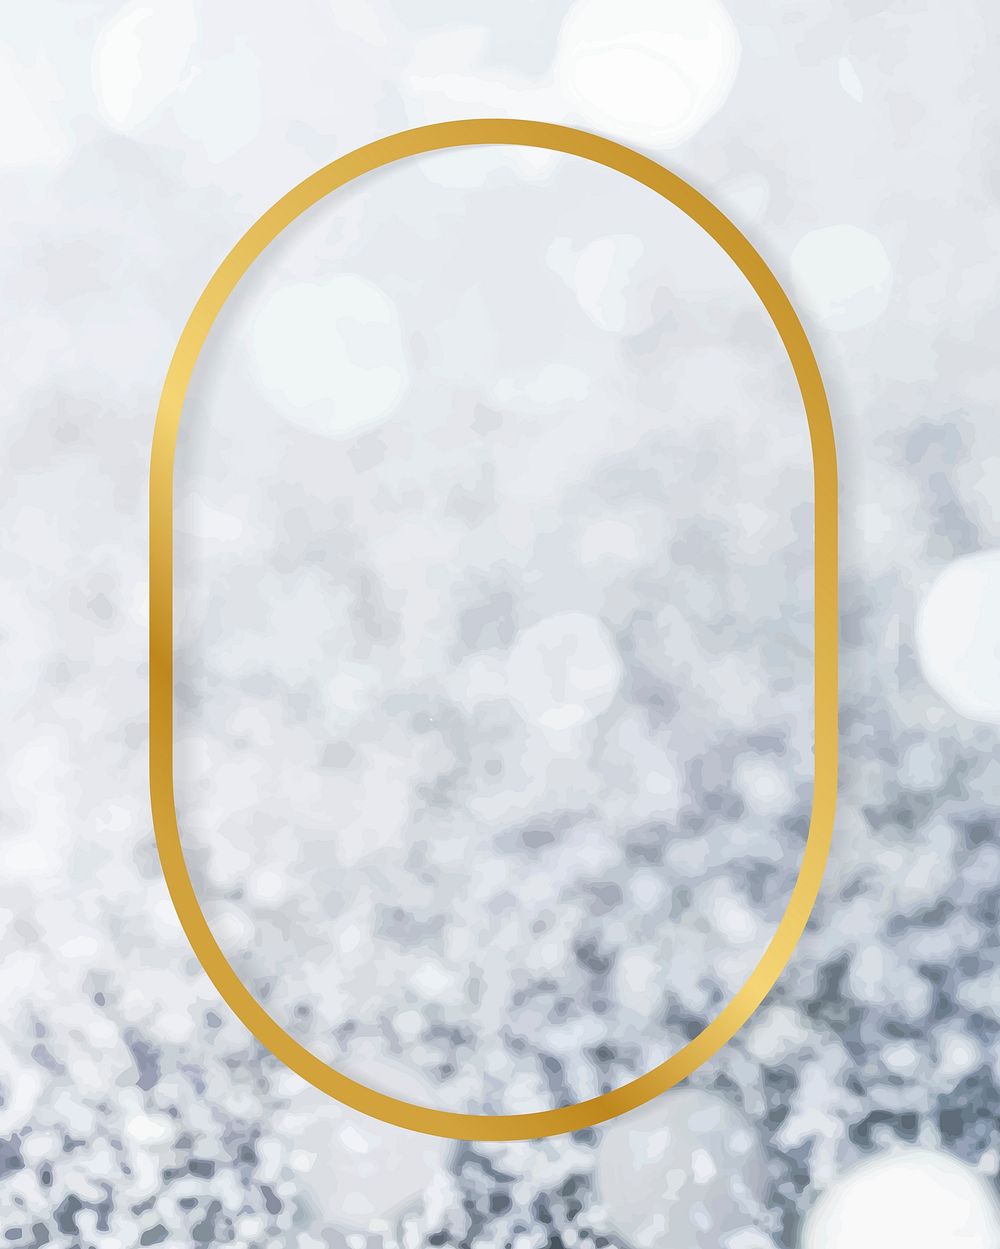 Golden framed oval on a glitter textured vector